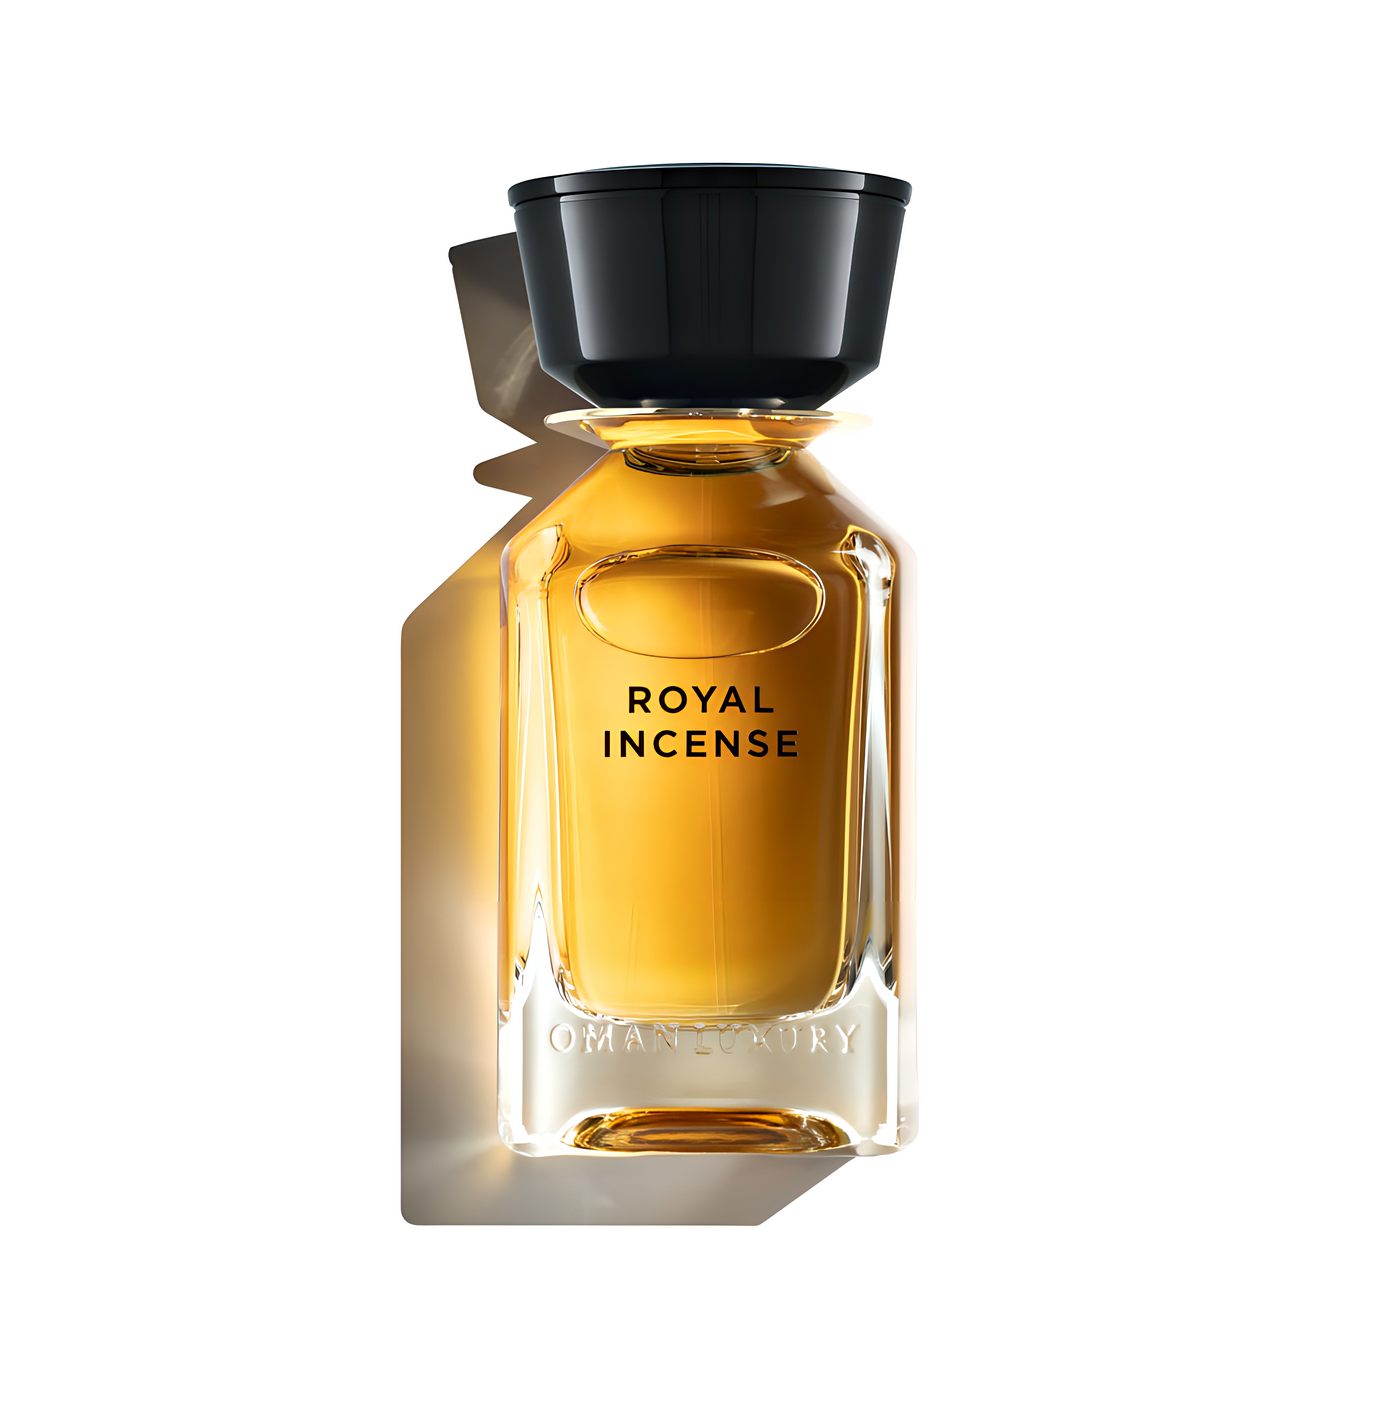 ON DEMAND BARBERS - Royal Incense Oman Luxury